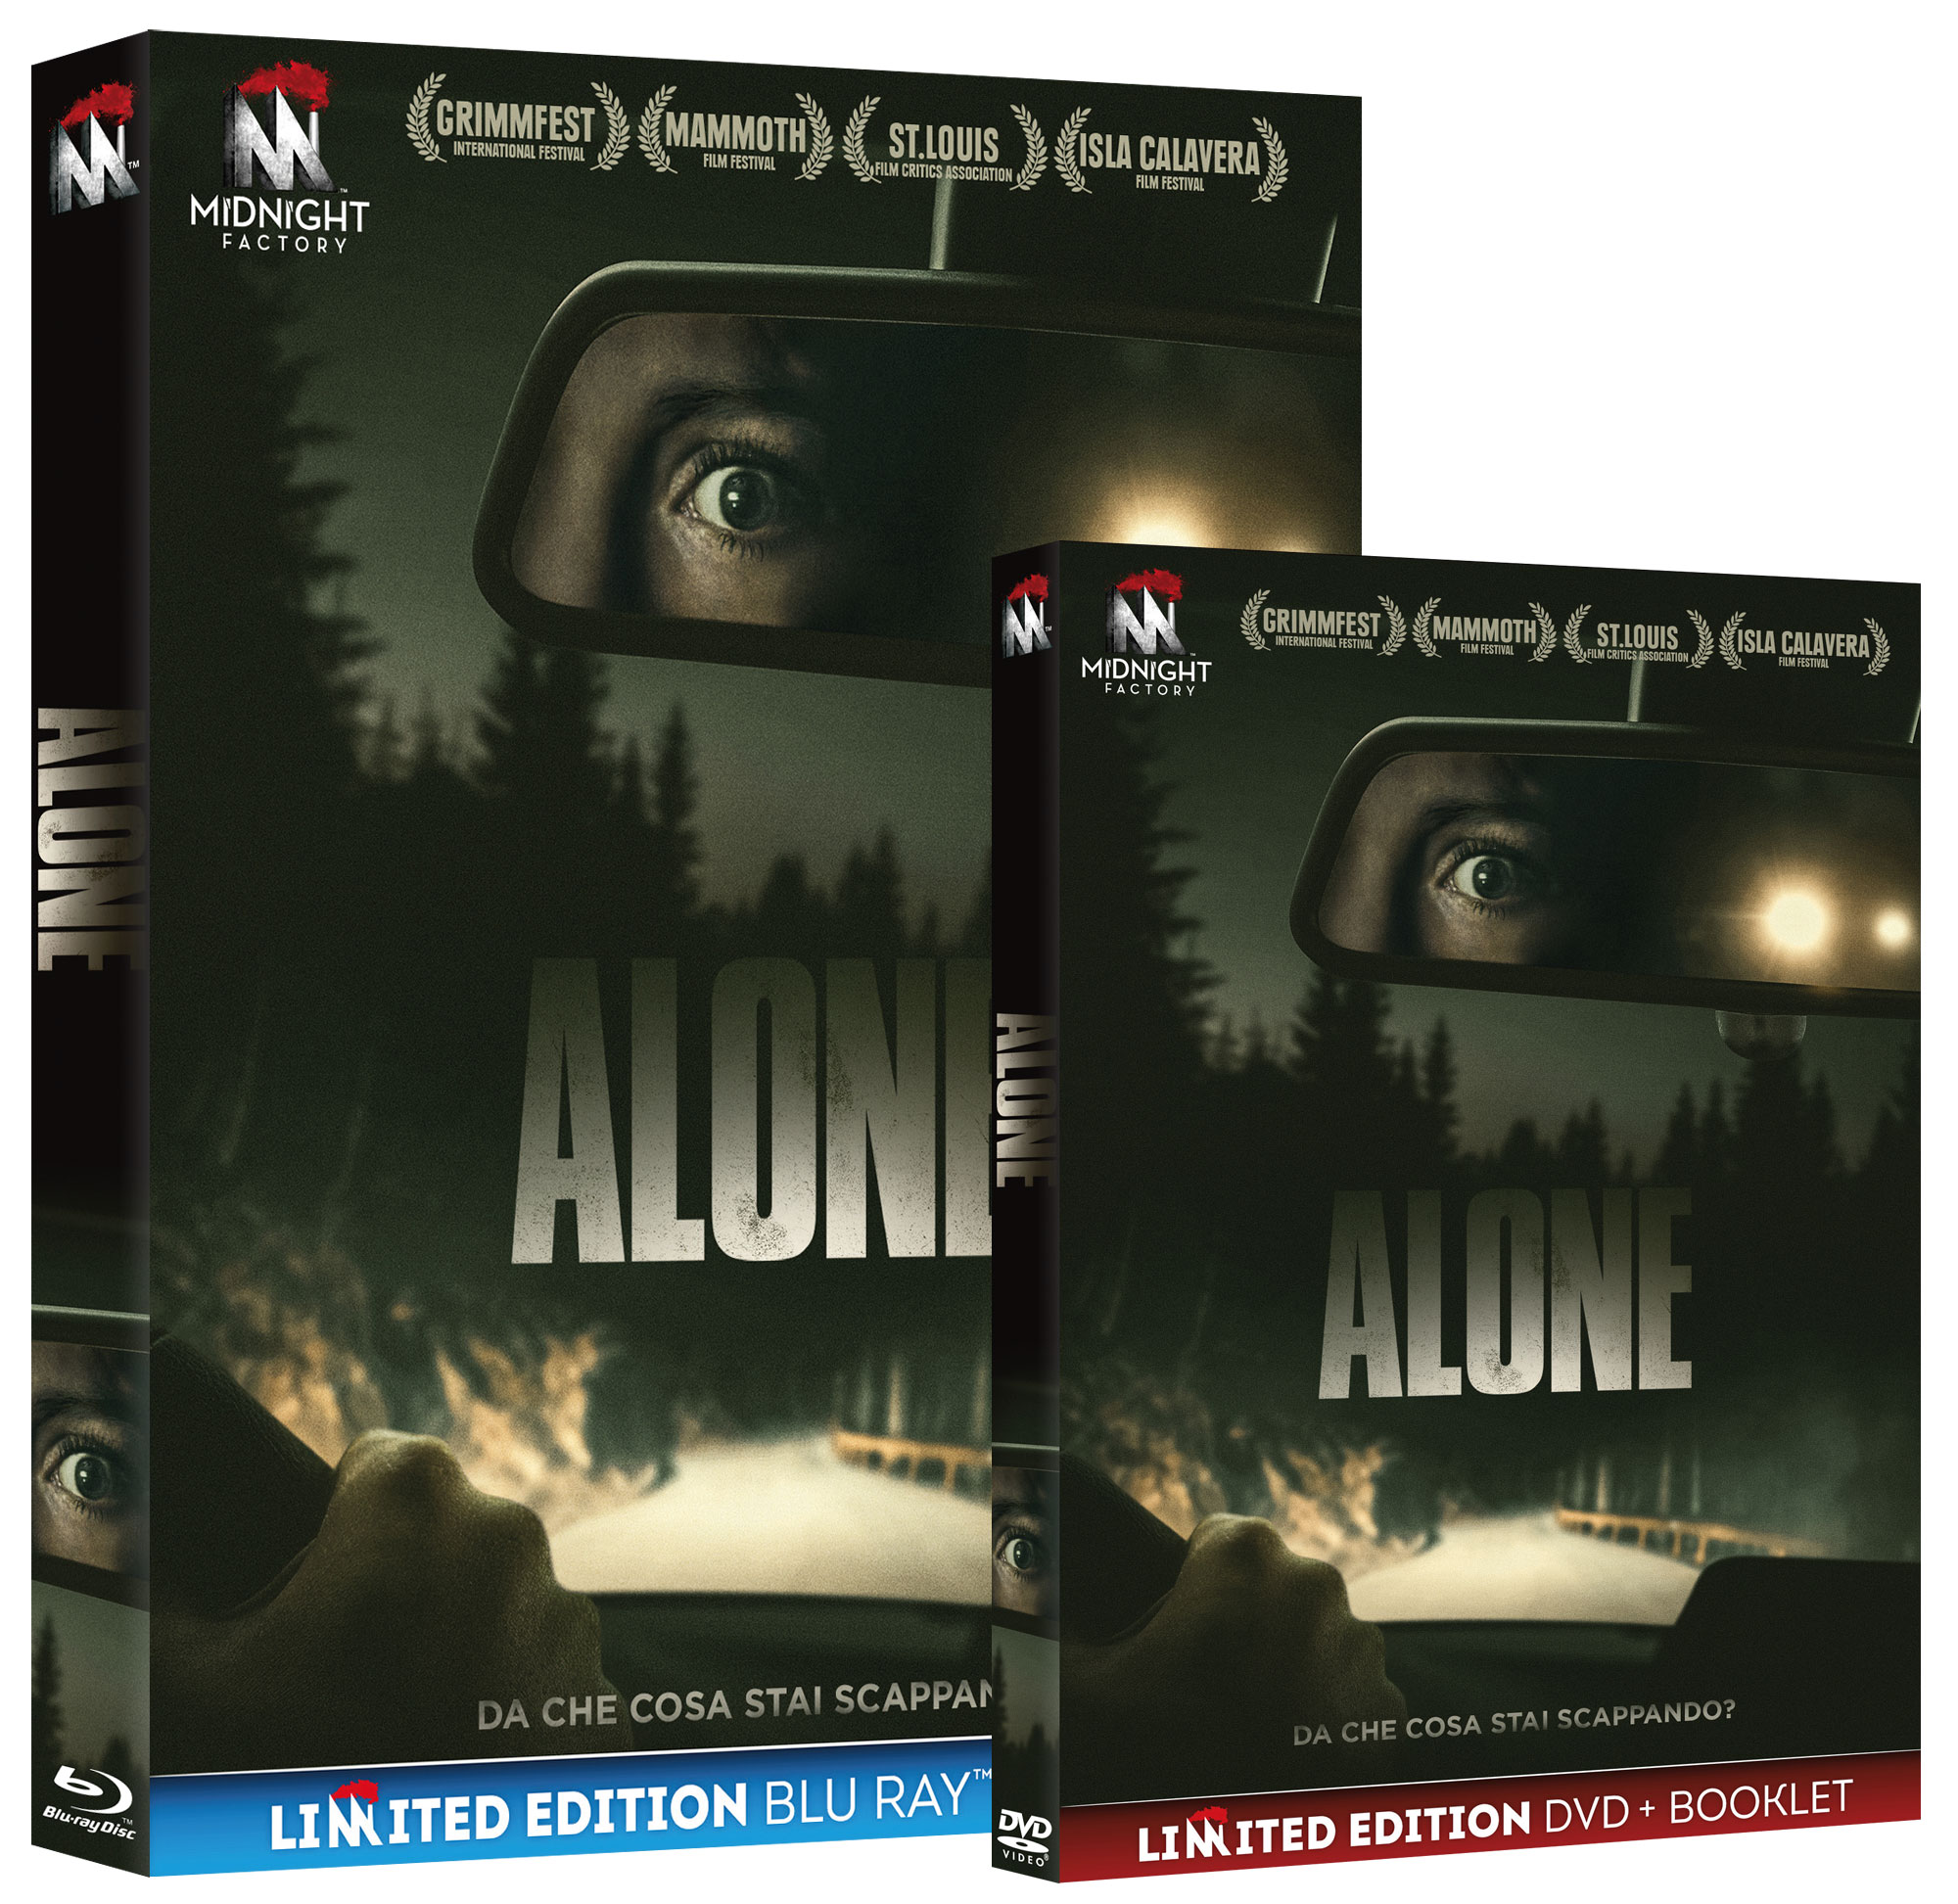 Alone in DVD e Blu-ray